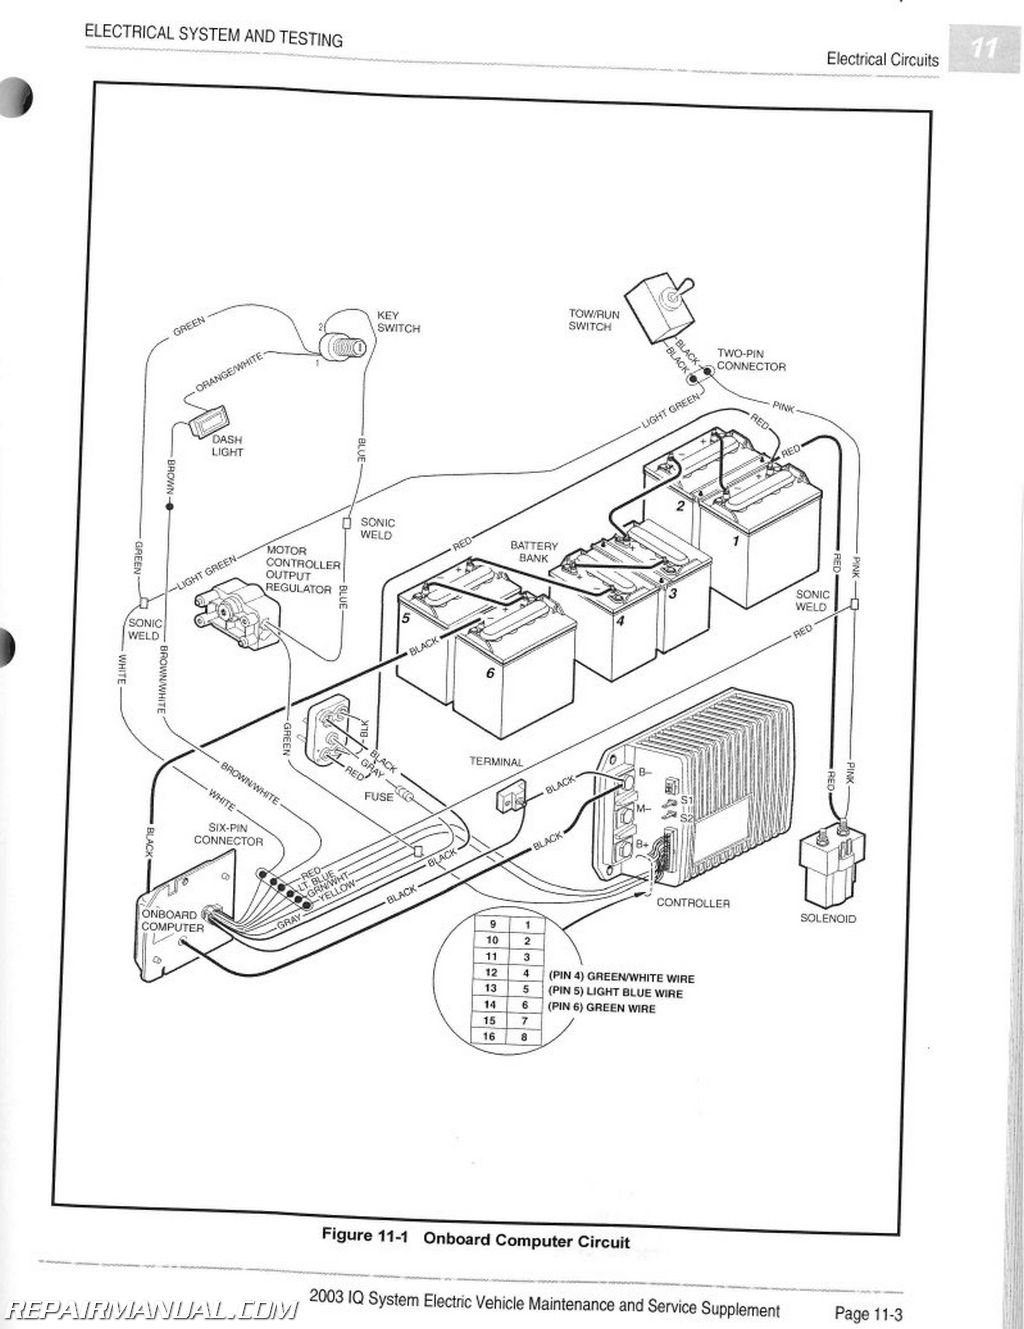 2003 Club Car IQ System Maintenance - Service Manual Supplement